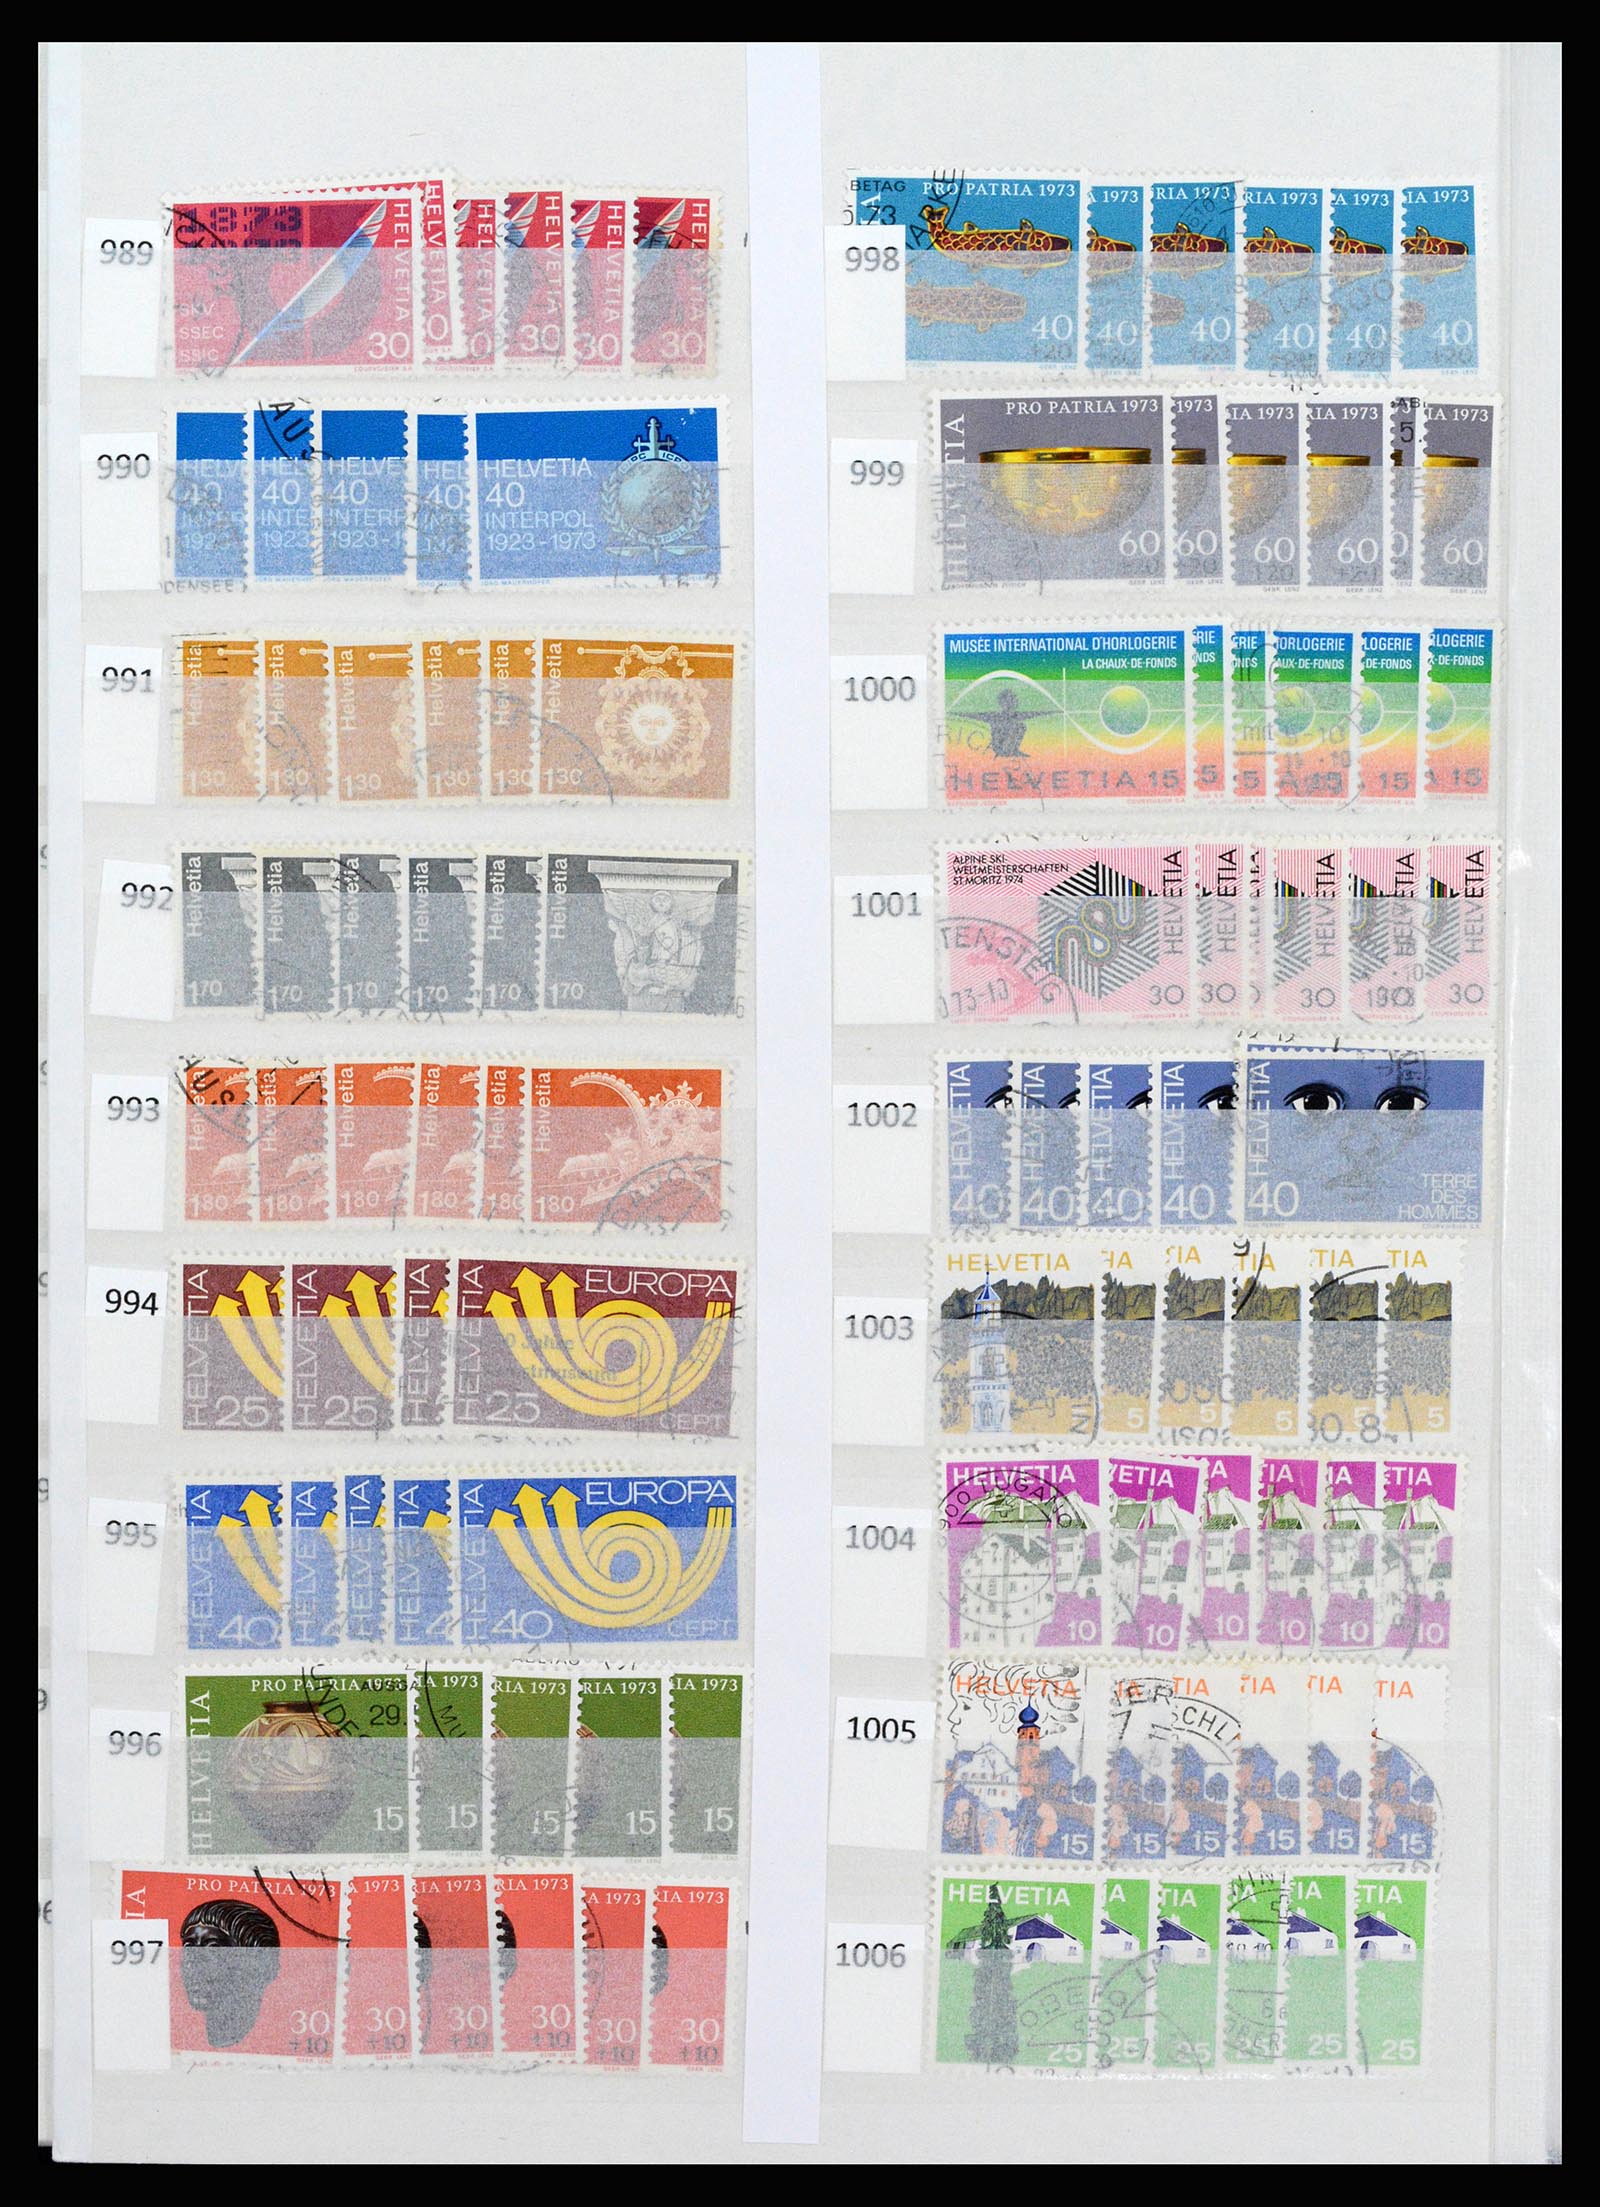 37252 053 - Stamp collection 37252 Switzerland 1900-2011.